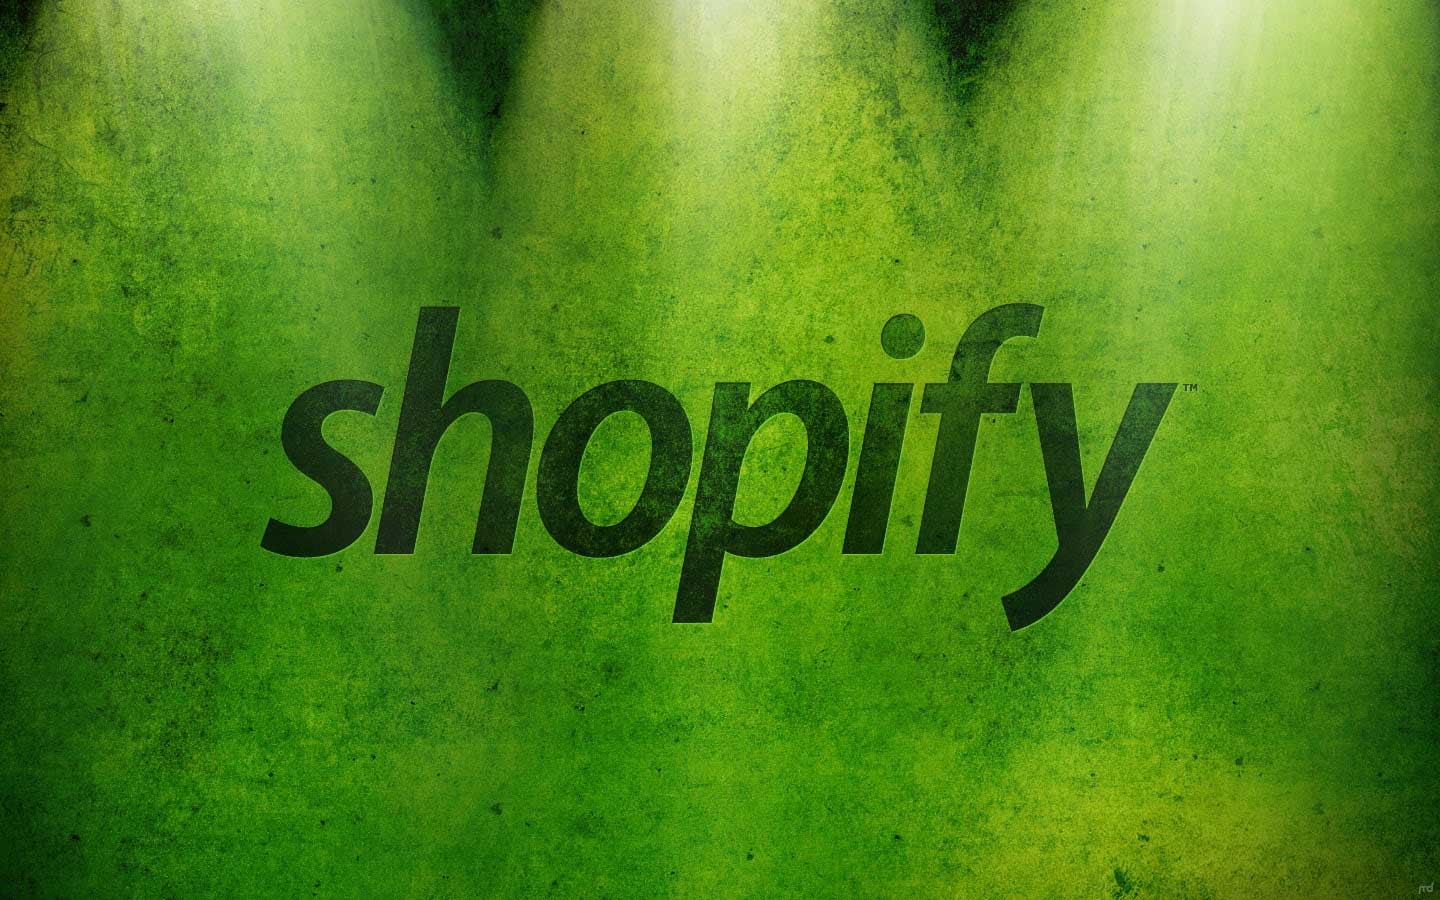 website development on shopify